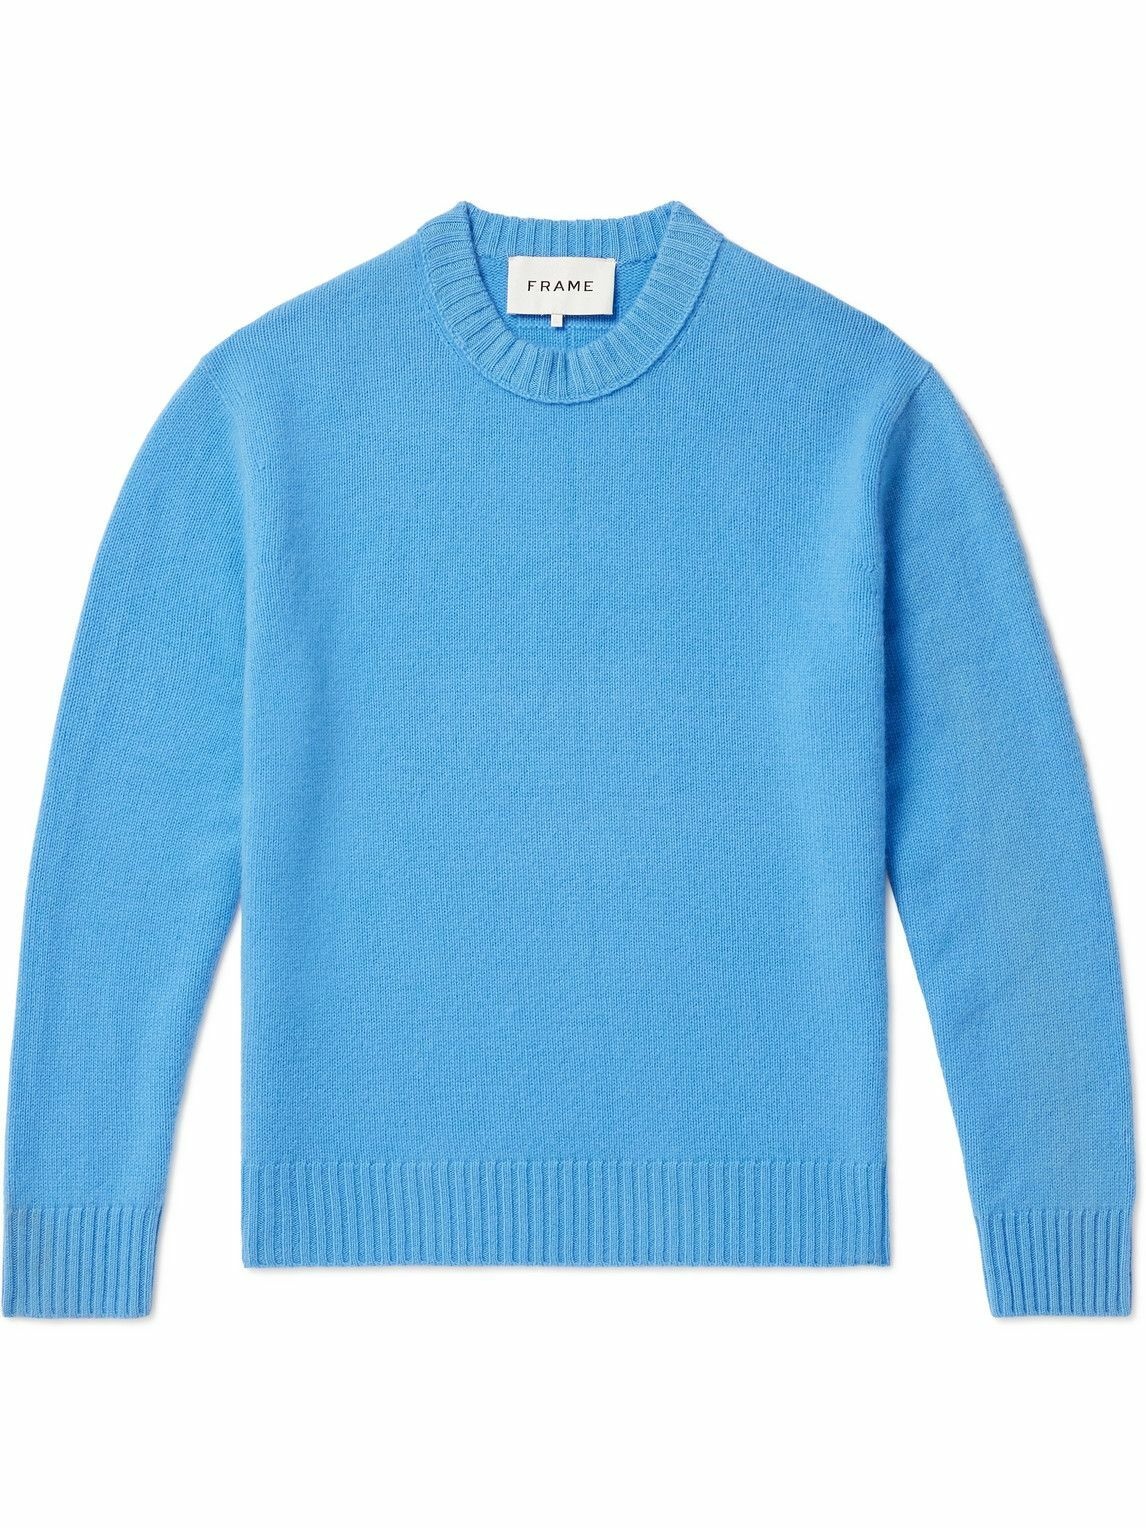 FRAME - Cashmere Sweater - Blue Frame Denim